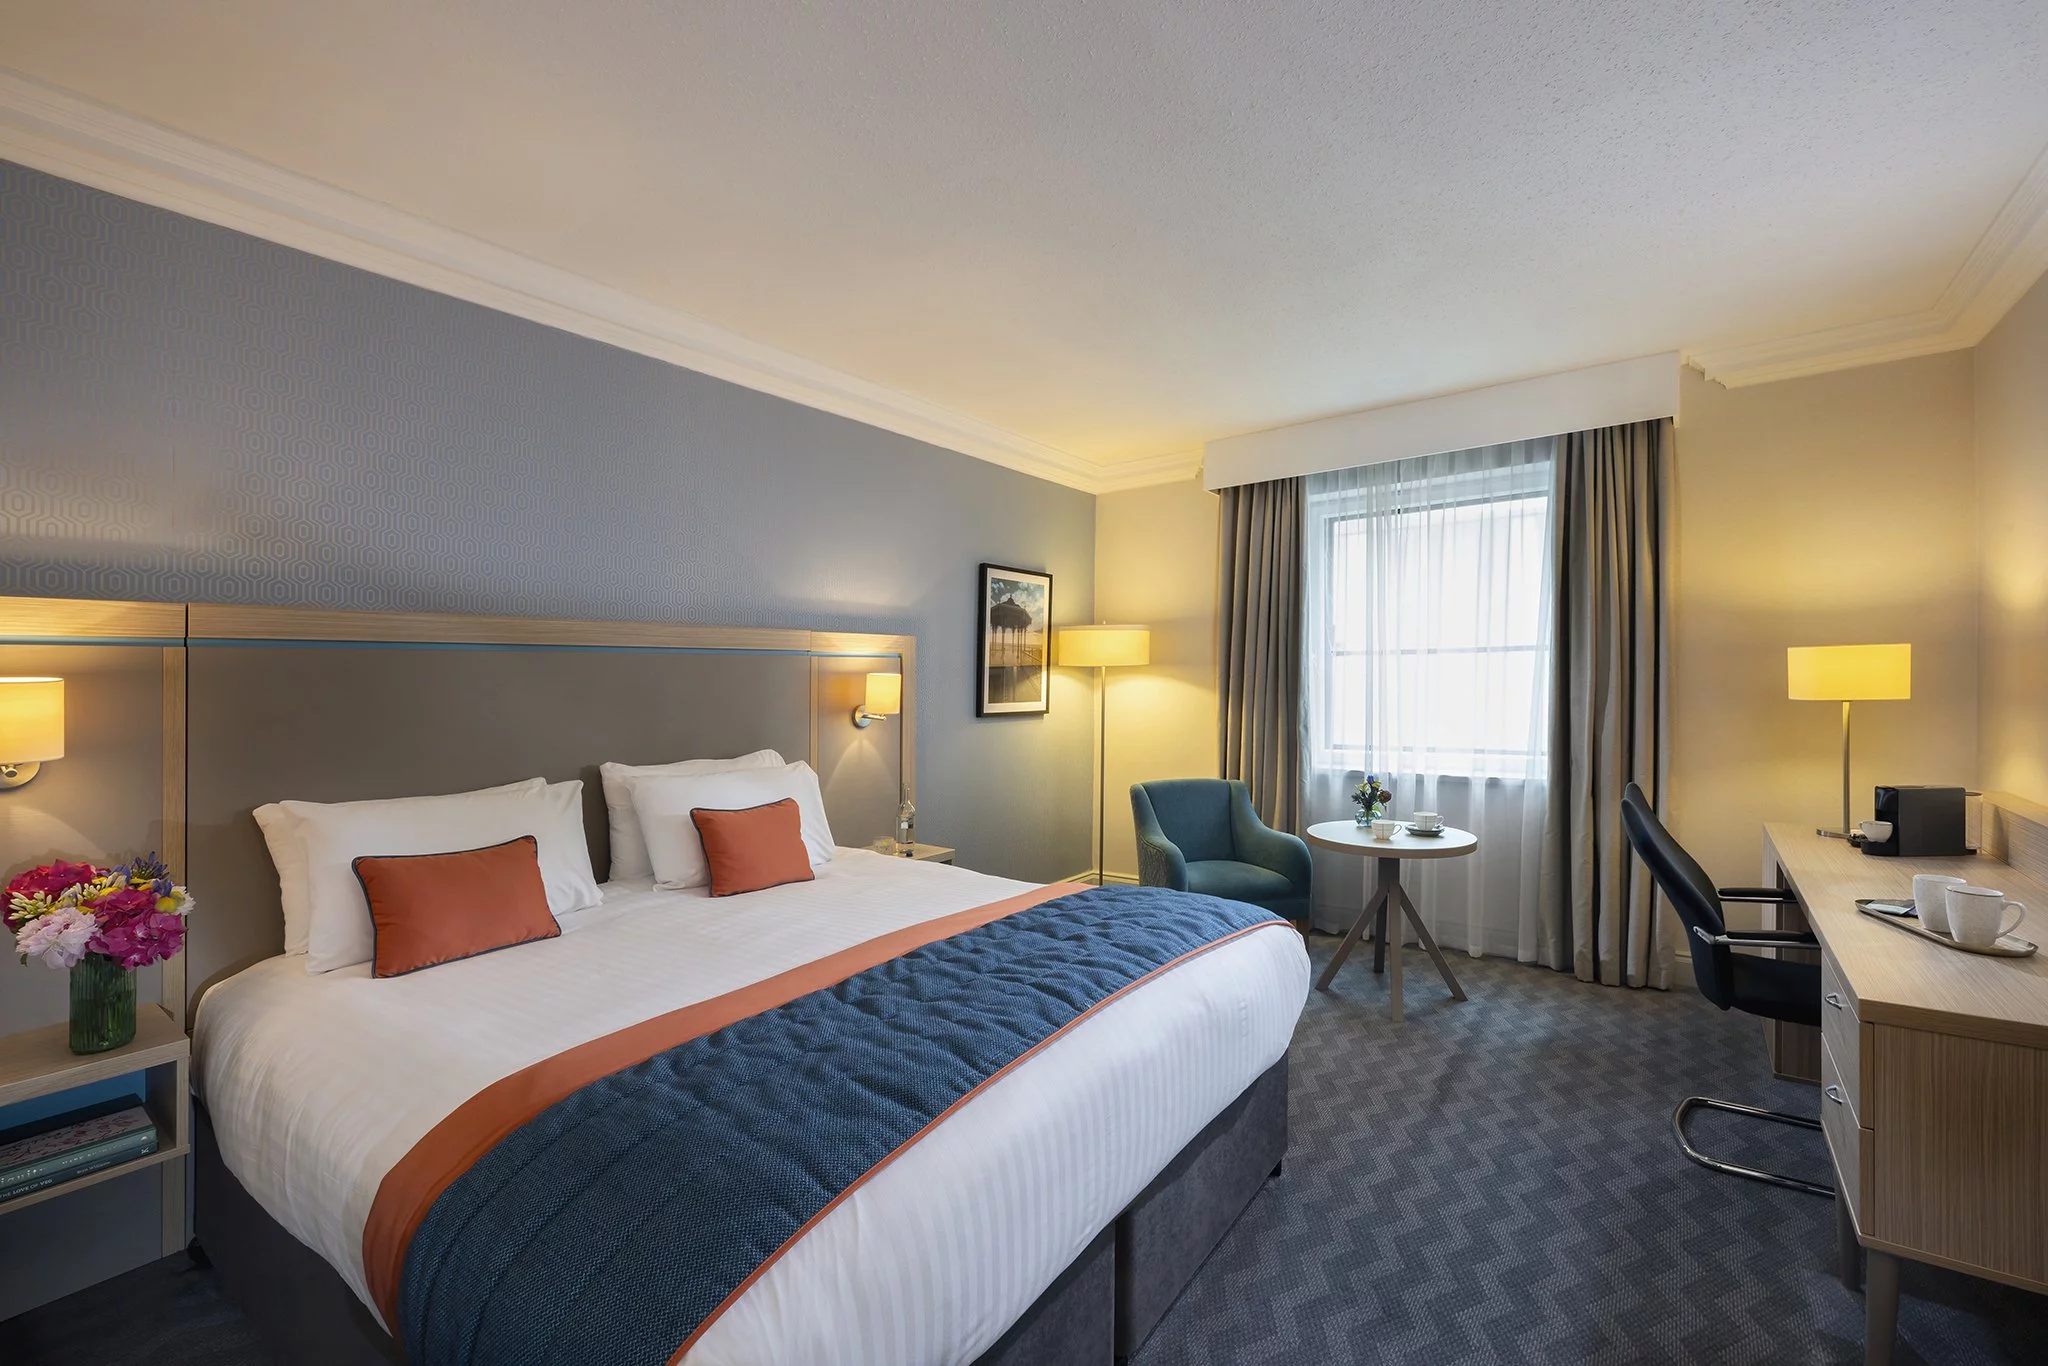 Leonardo Royal Hotel Brighton Waterfront - Standard Room